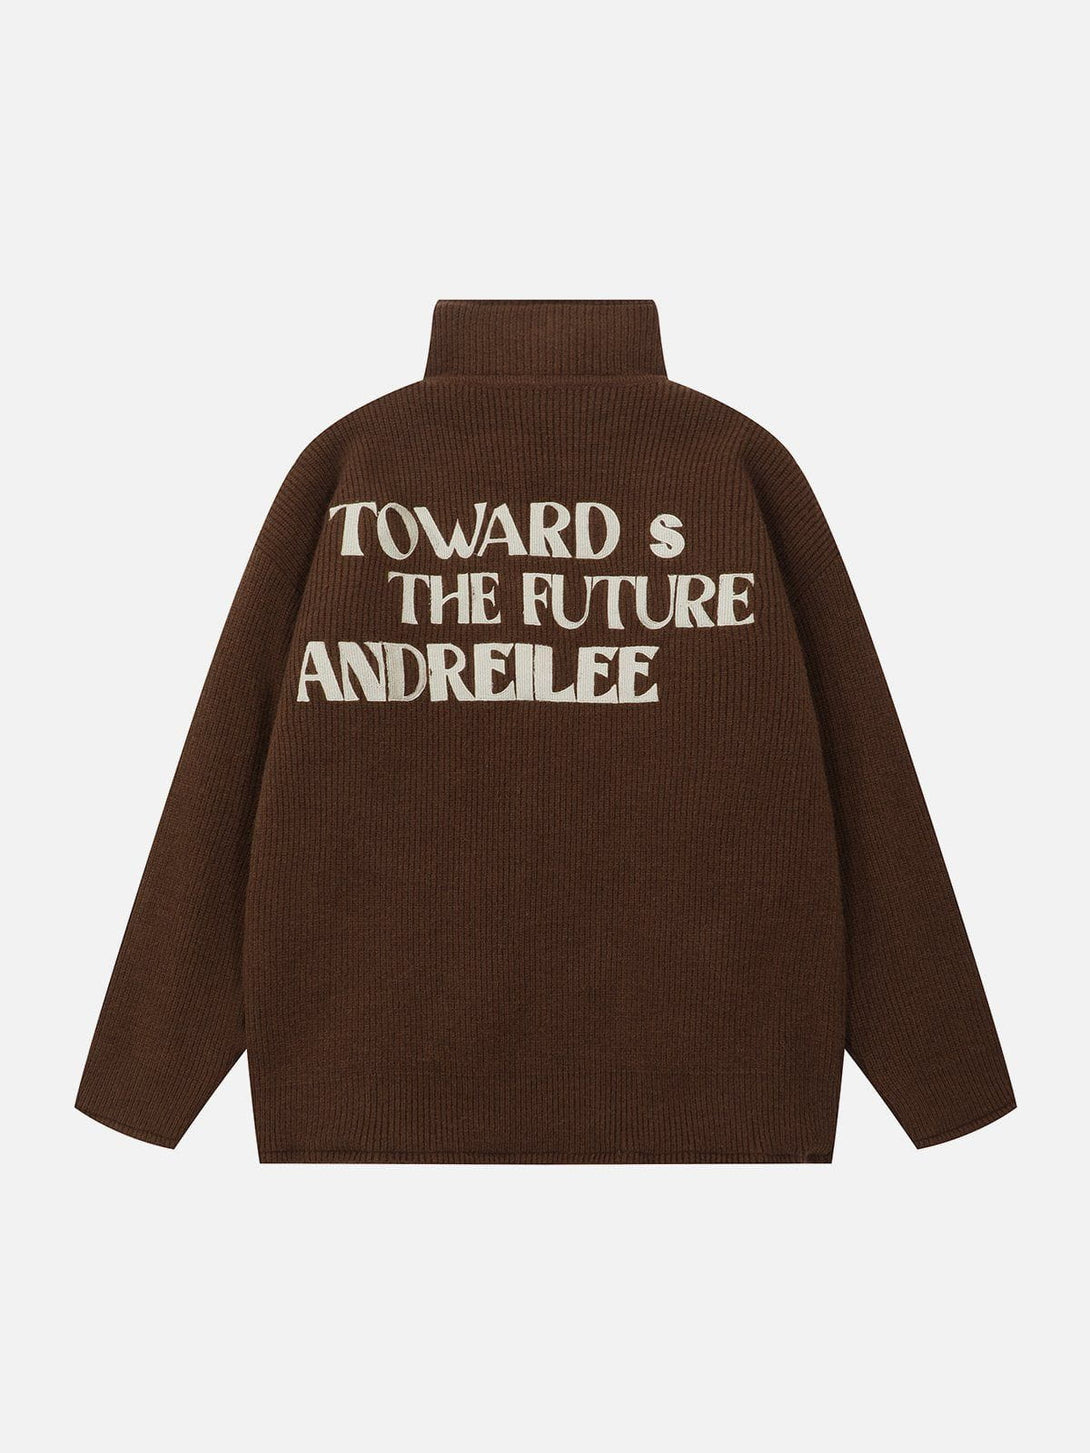 AlanBalen® - Reversible Stand Collar Knitted Winter Coat AlanBalen